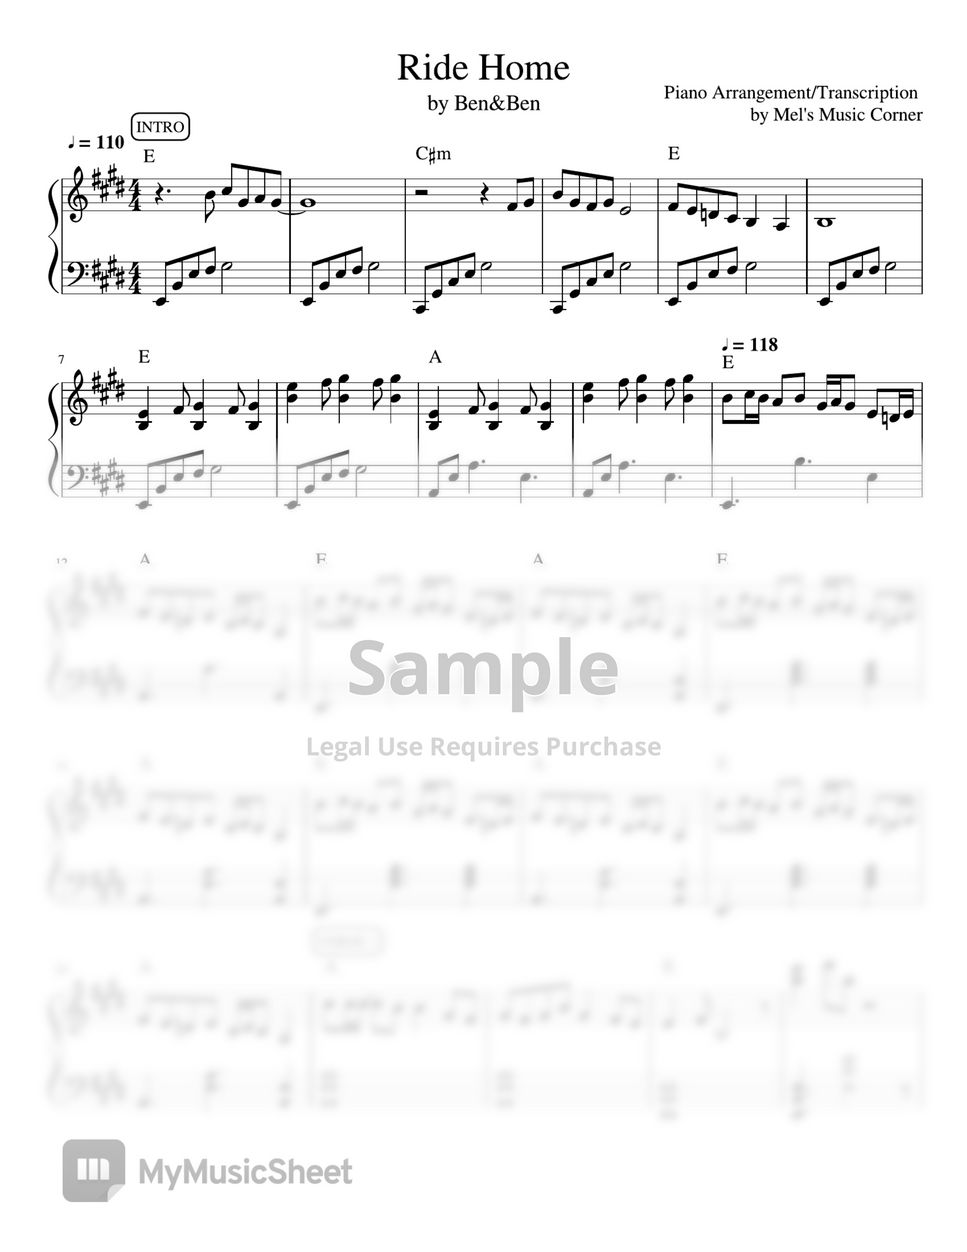 Ben&Ben - Ride Home (piano sheet music) by Mel's Music Corner